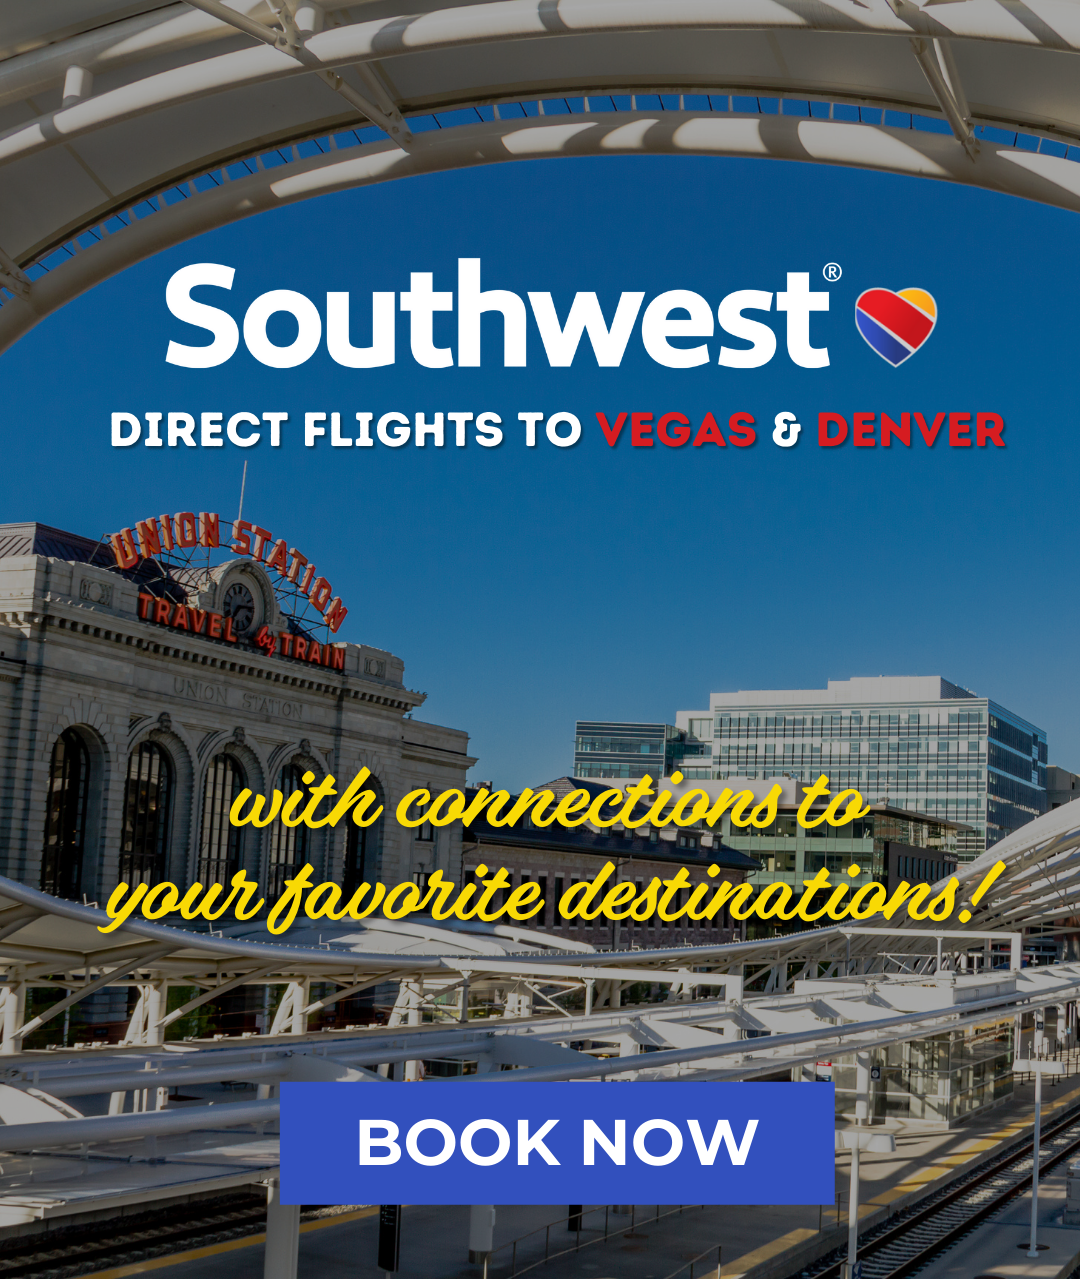 Southwest Direct flights